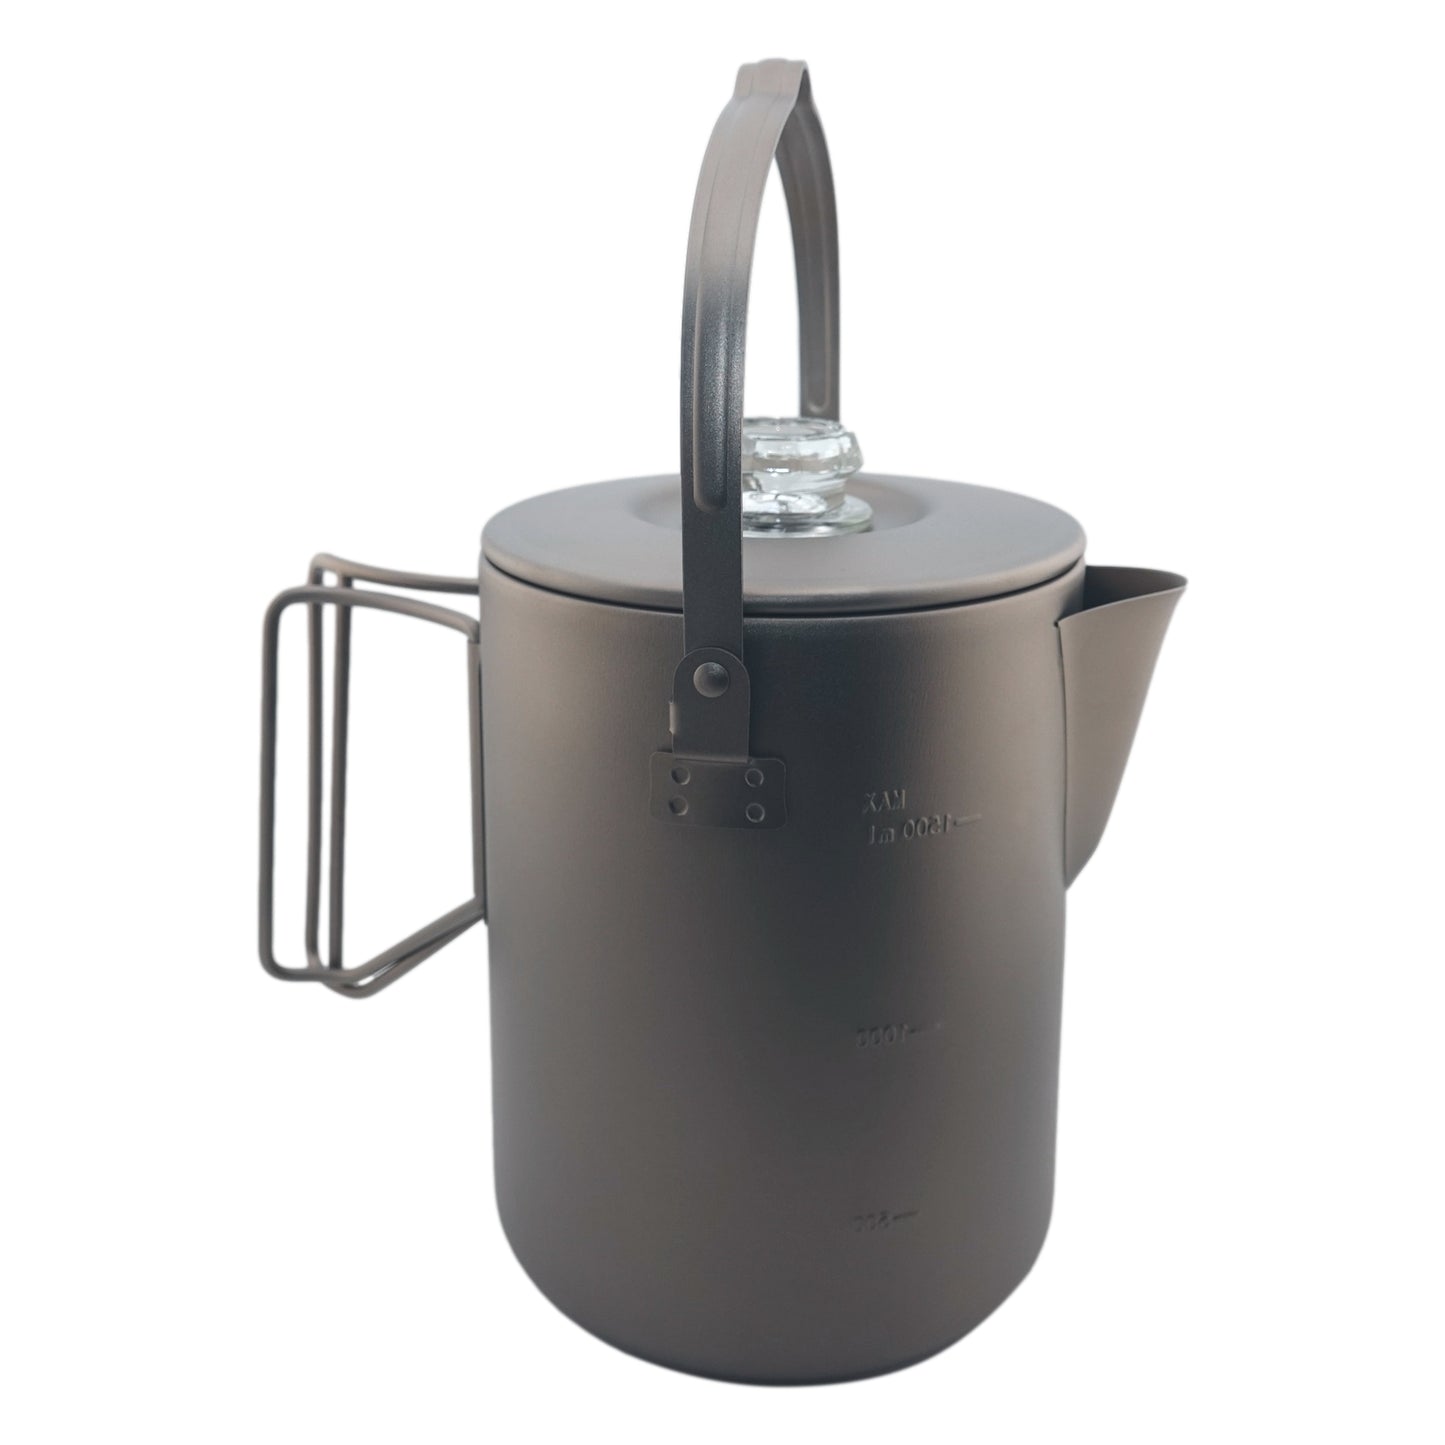 Valtcan Titan-Perkolator-Kaffeemaschine, Topf, 1,5 l, Filterbrühen, ultraleichter Wasserkocher, Camping-Wasserkocher, 50,7 oz, Fassungsvermögen 395 g